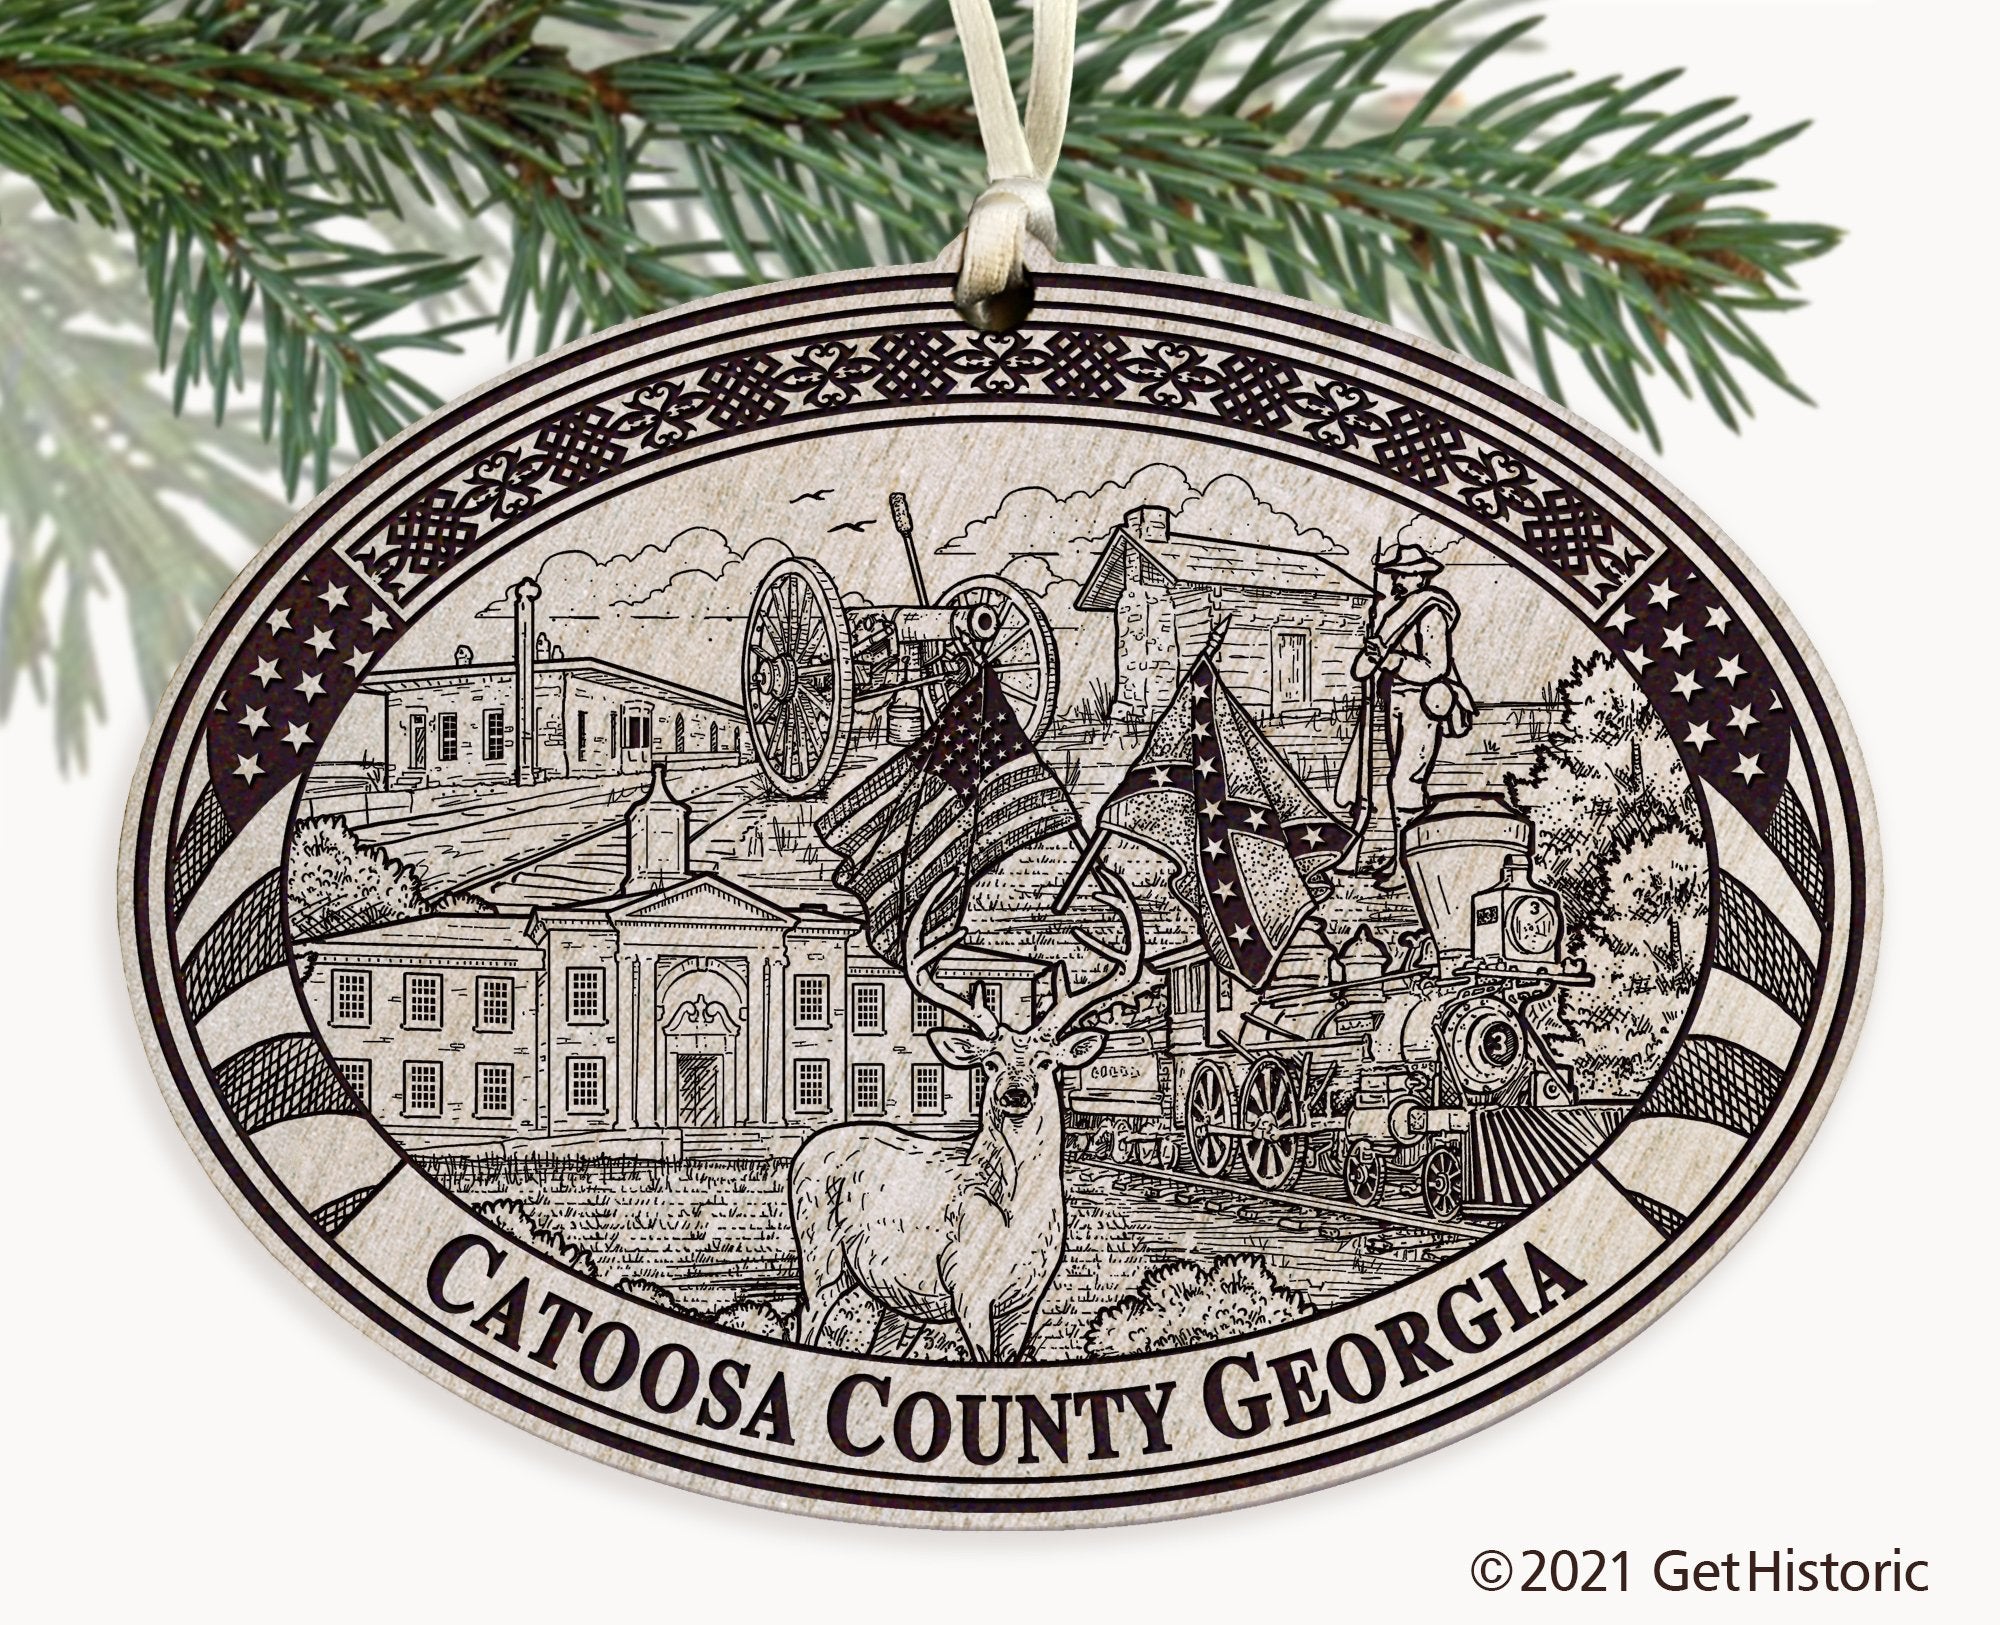 Catoosa County Georgia Engraved Ornament